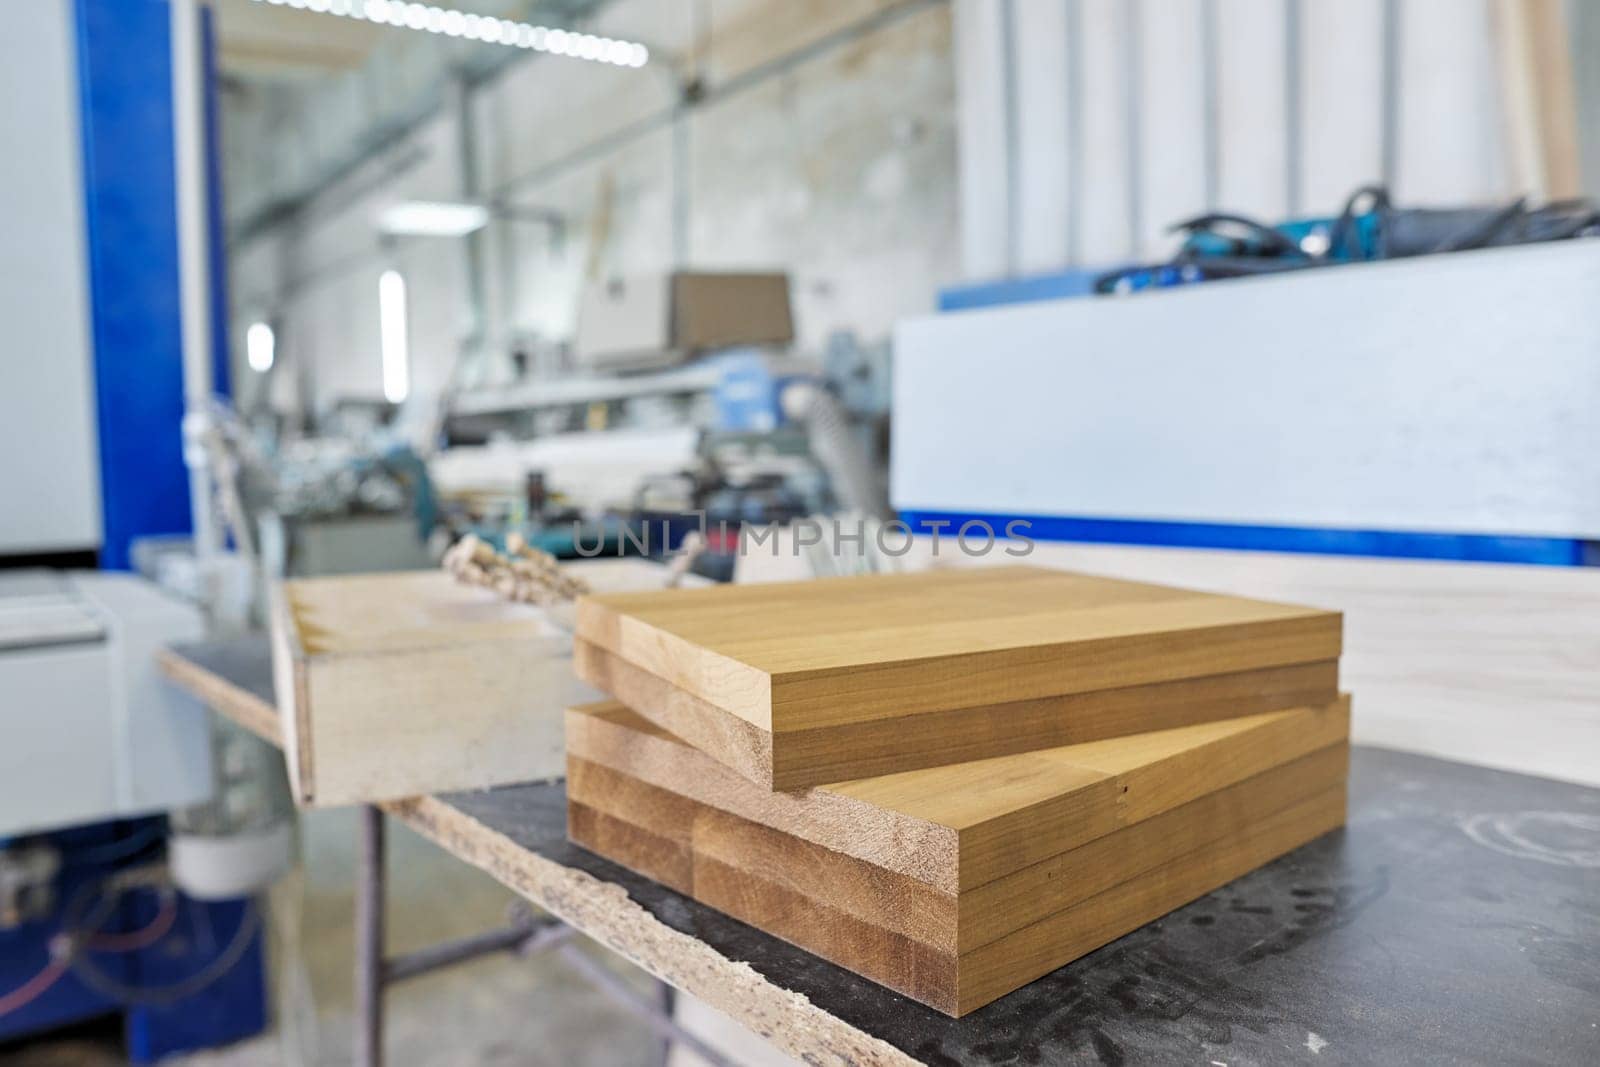 Wooden furniture details, background carpentry woodworking woodshop.